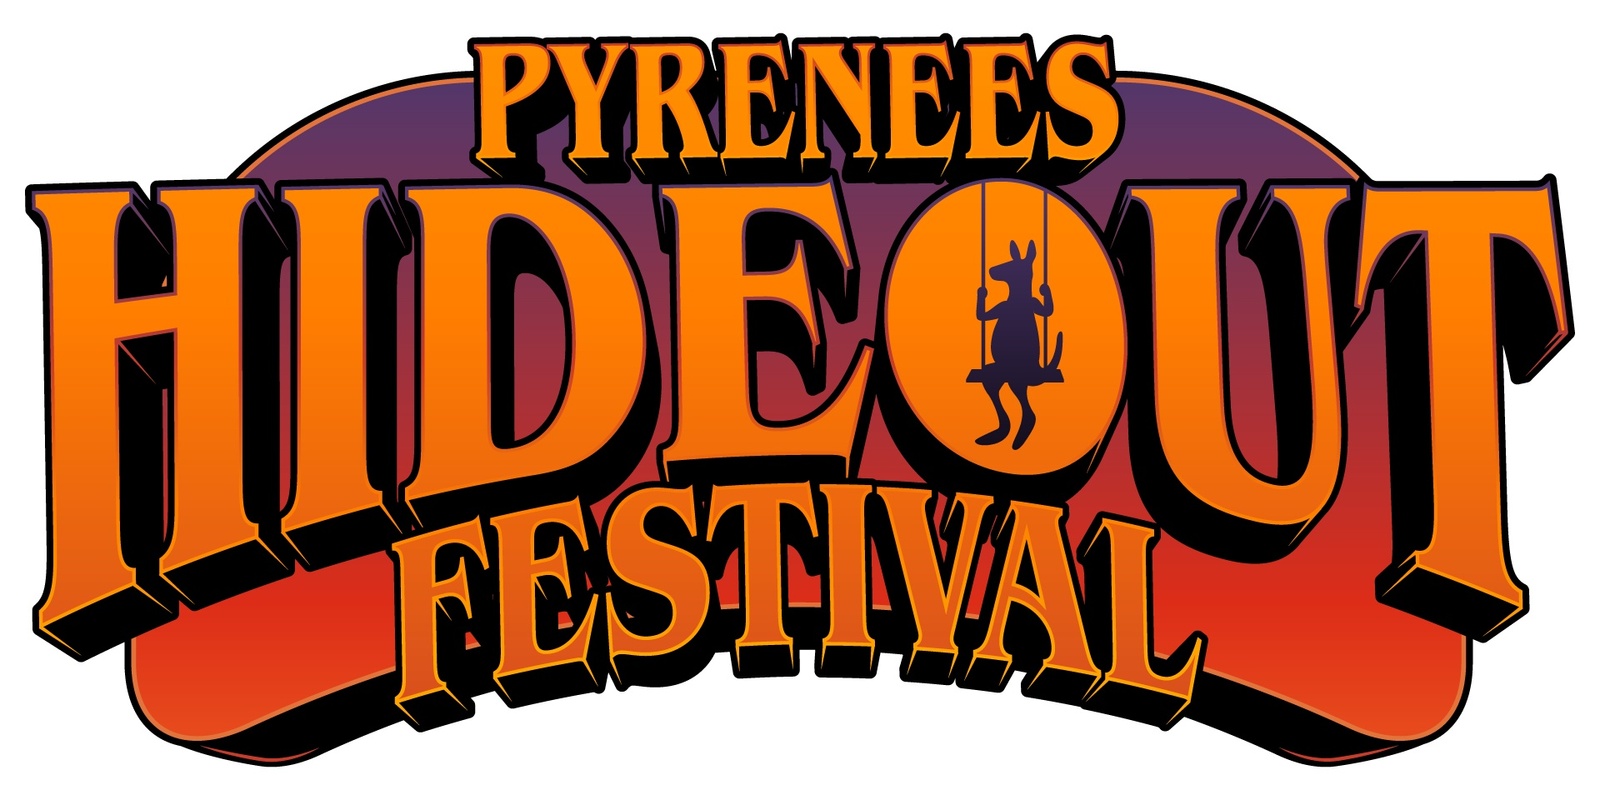 Pyrenees Hideout Festival's banner